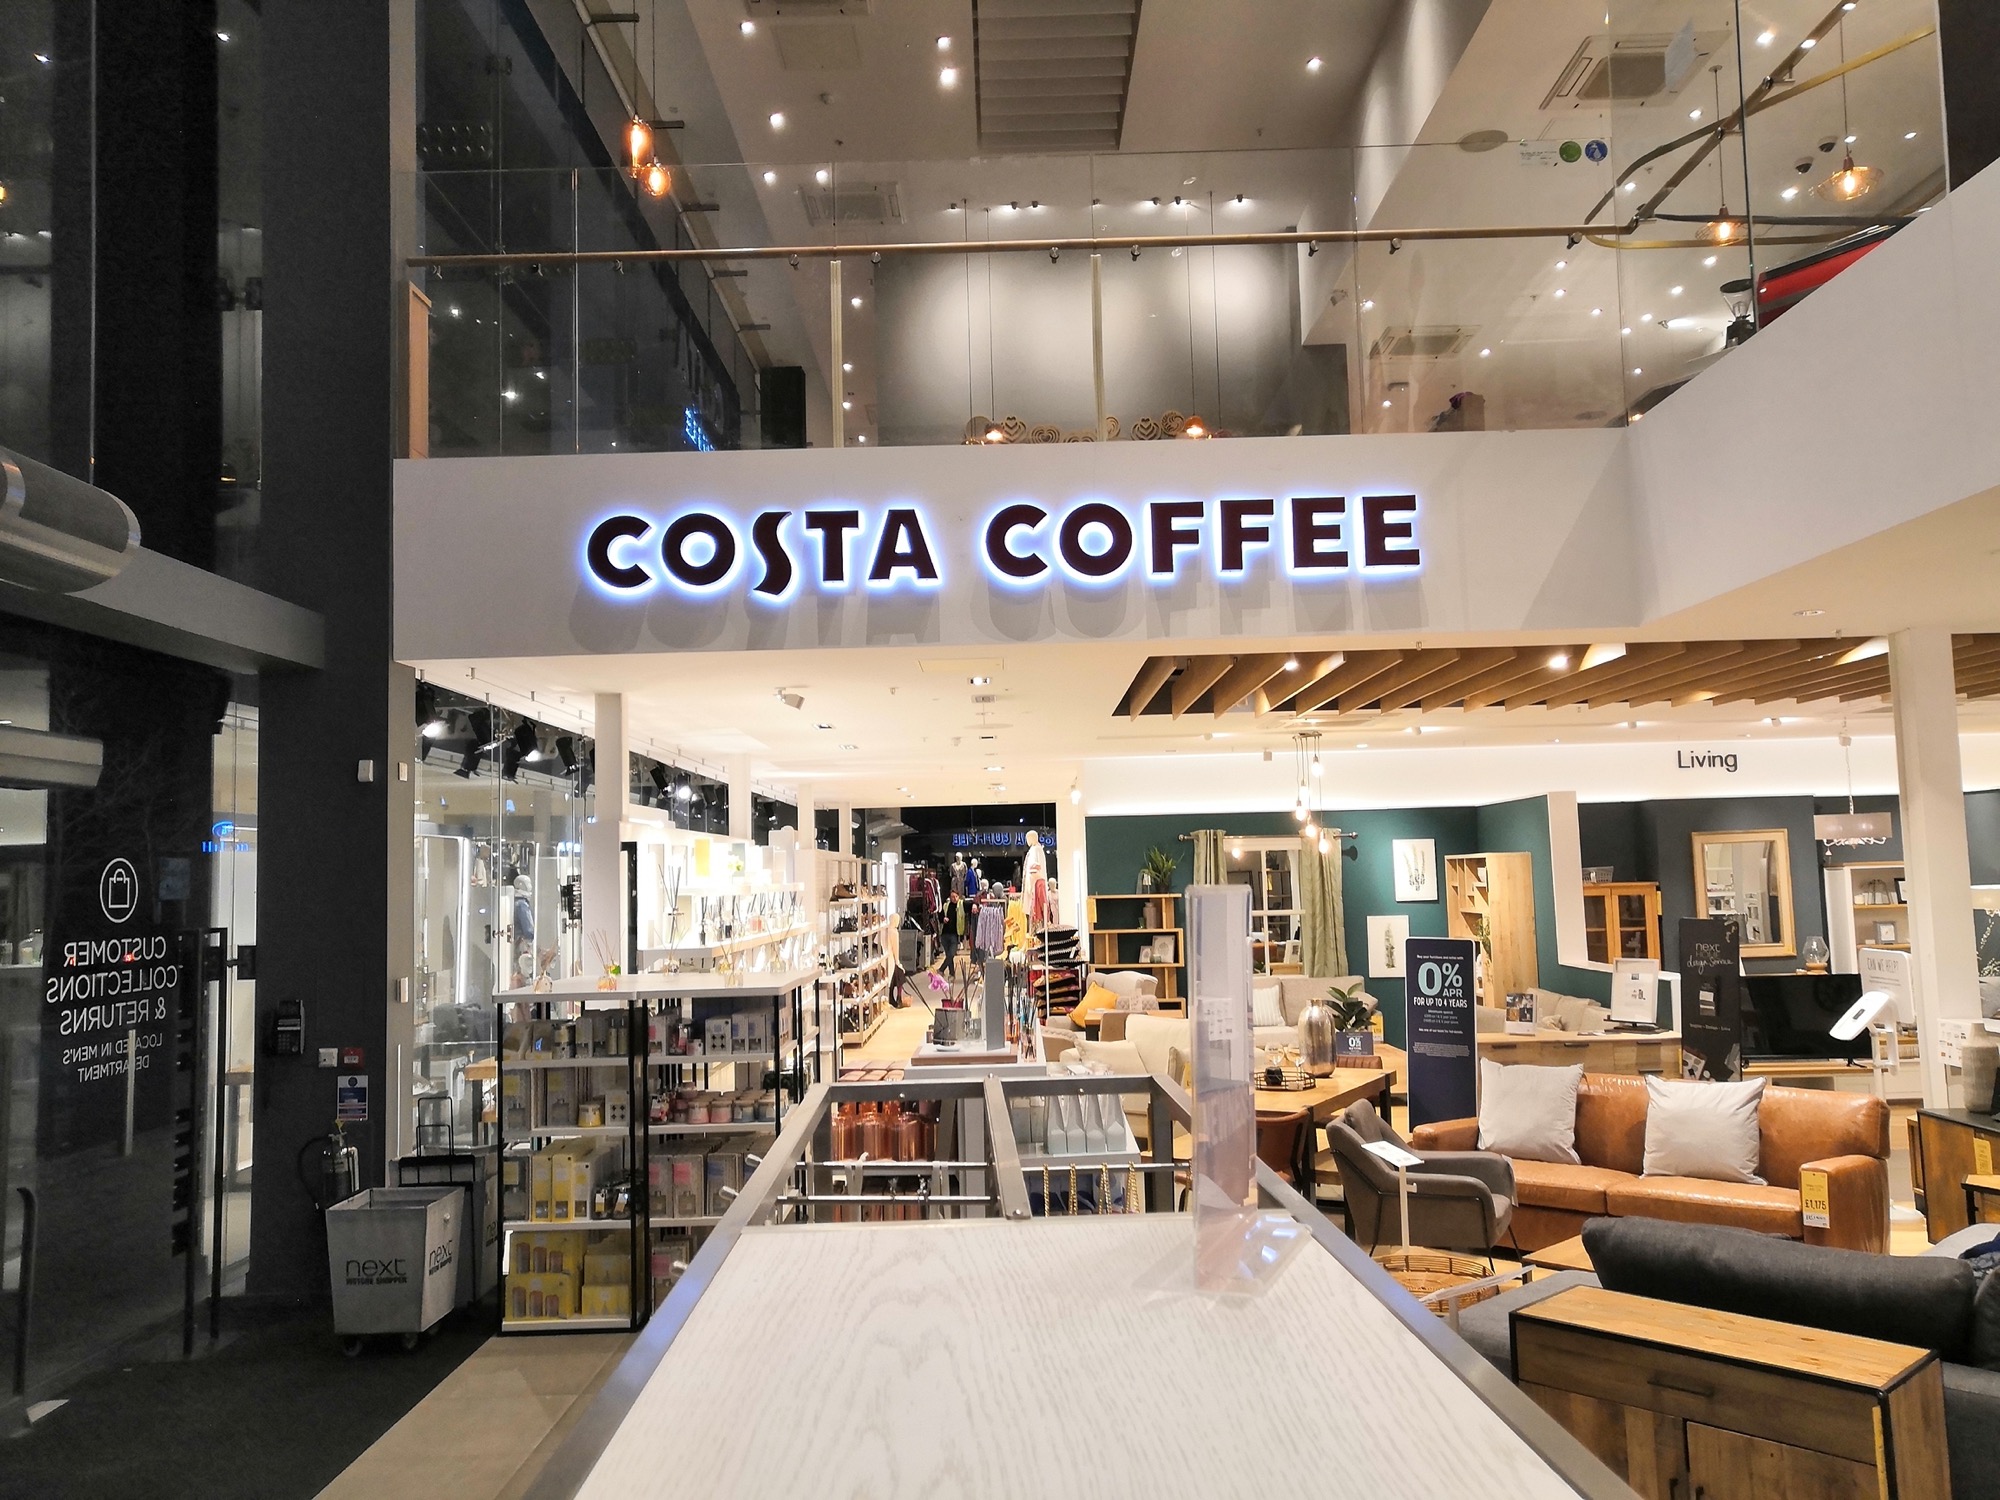 Costa coffee halo signage